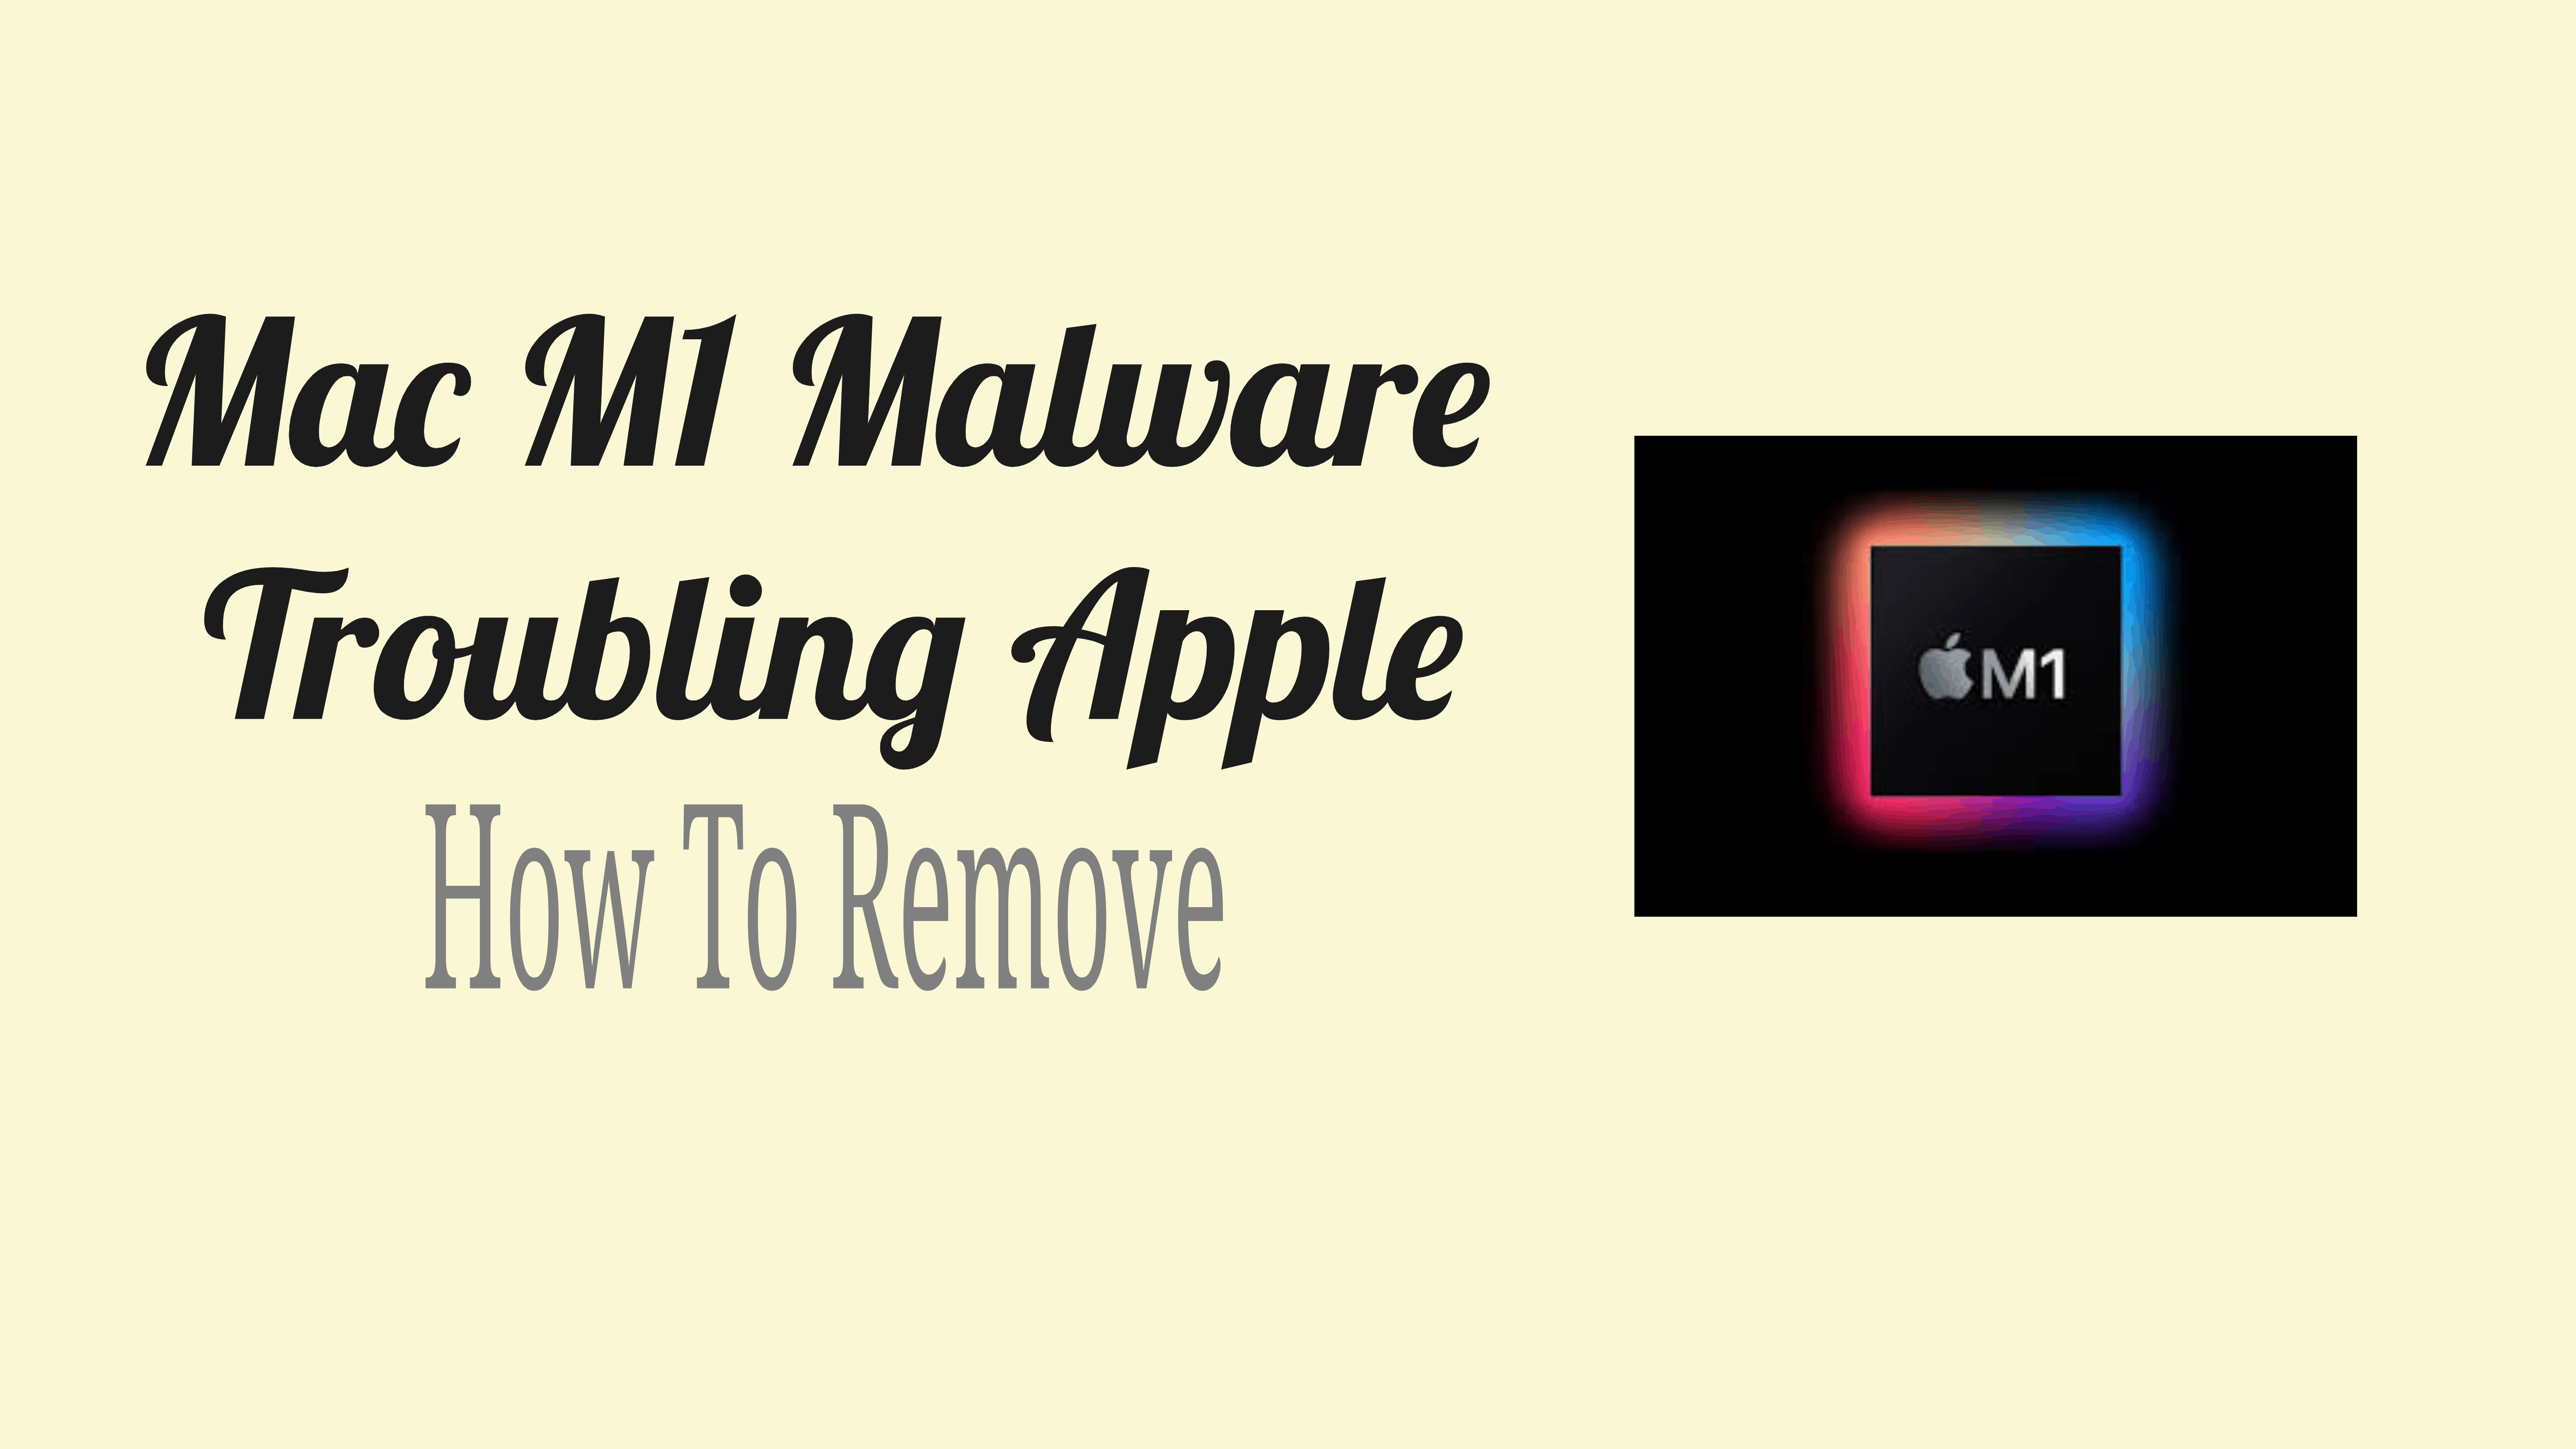 Mac M1 Malware Troubling Apple